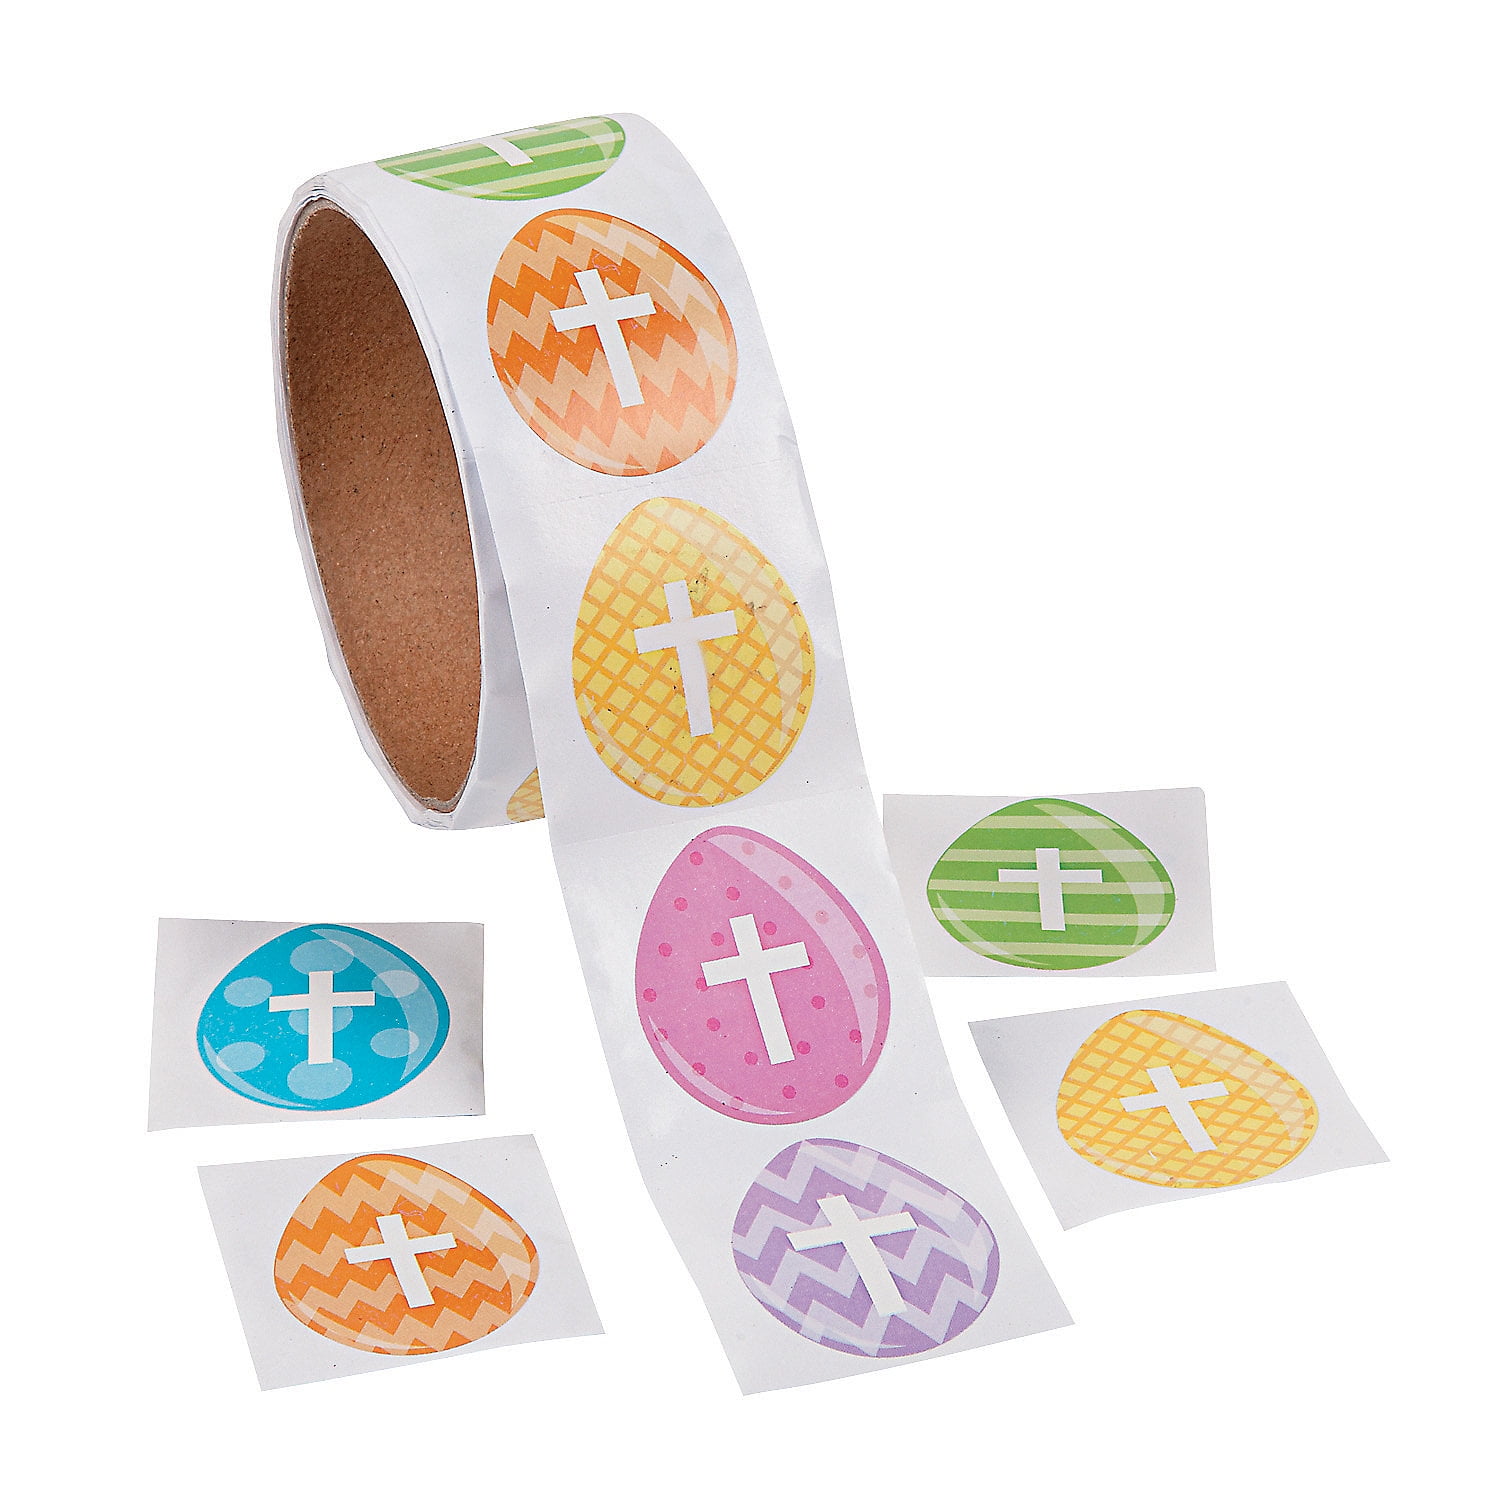 Cross Christian Religious 50 1 Planner Calendar Scrapbooking Crafting  Stickers 